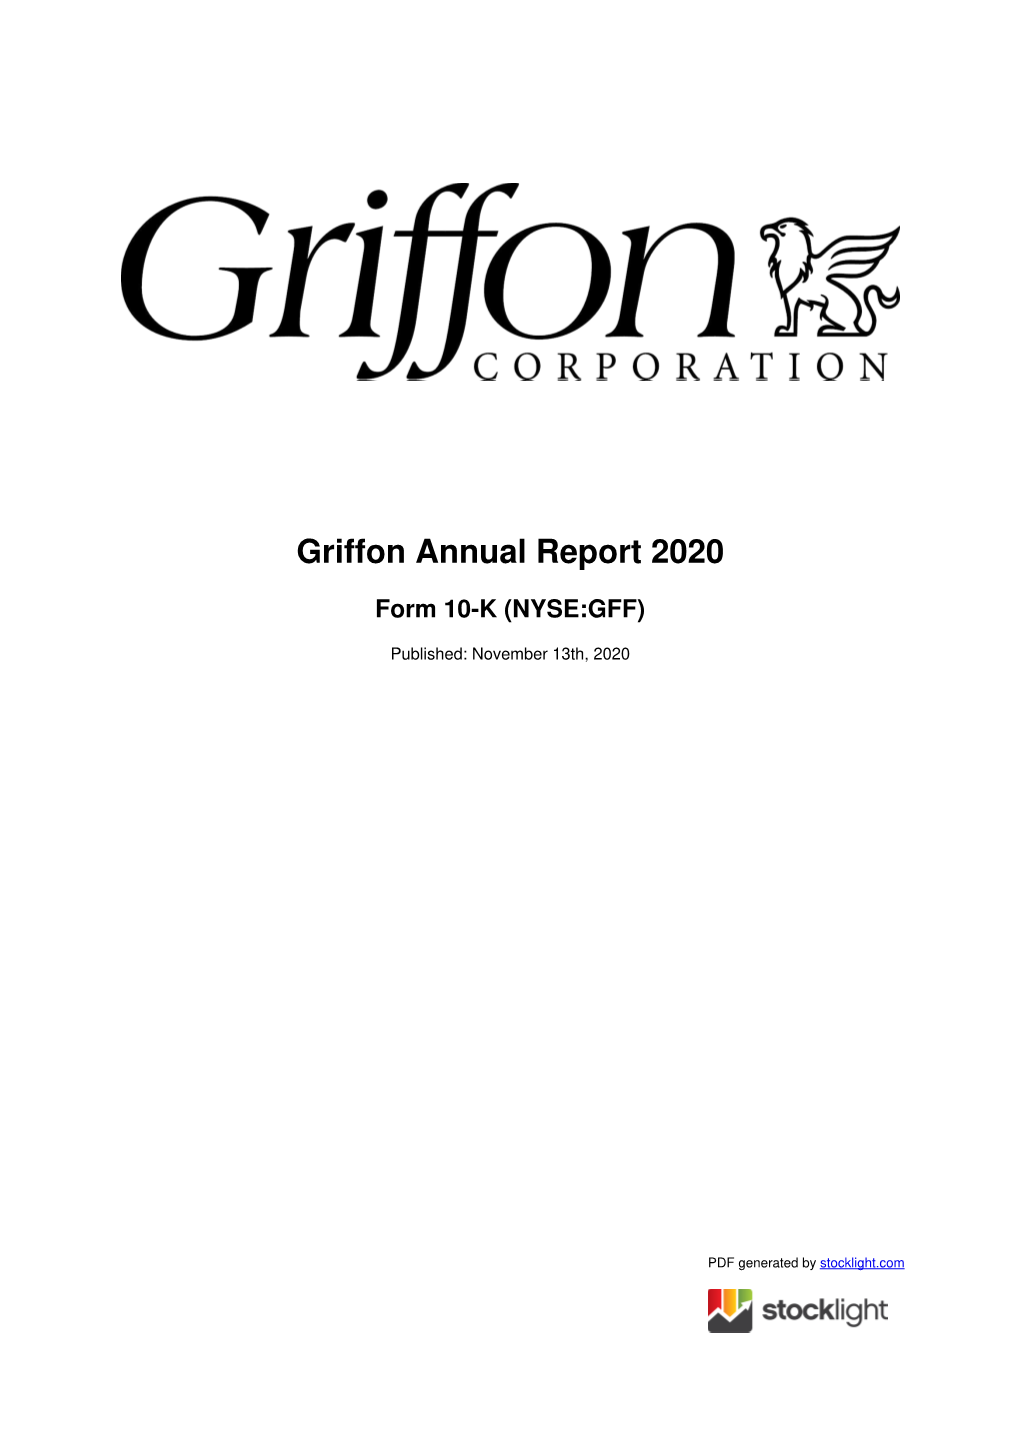 Griffon Corporation Annual Report 2020